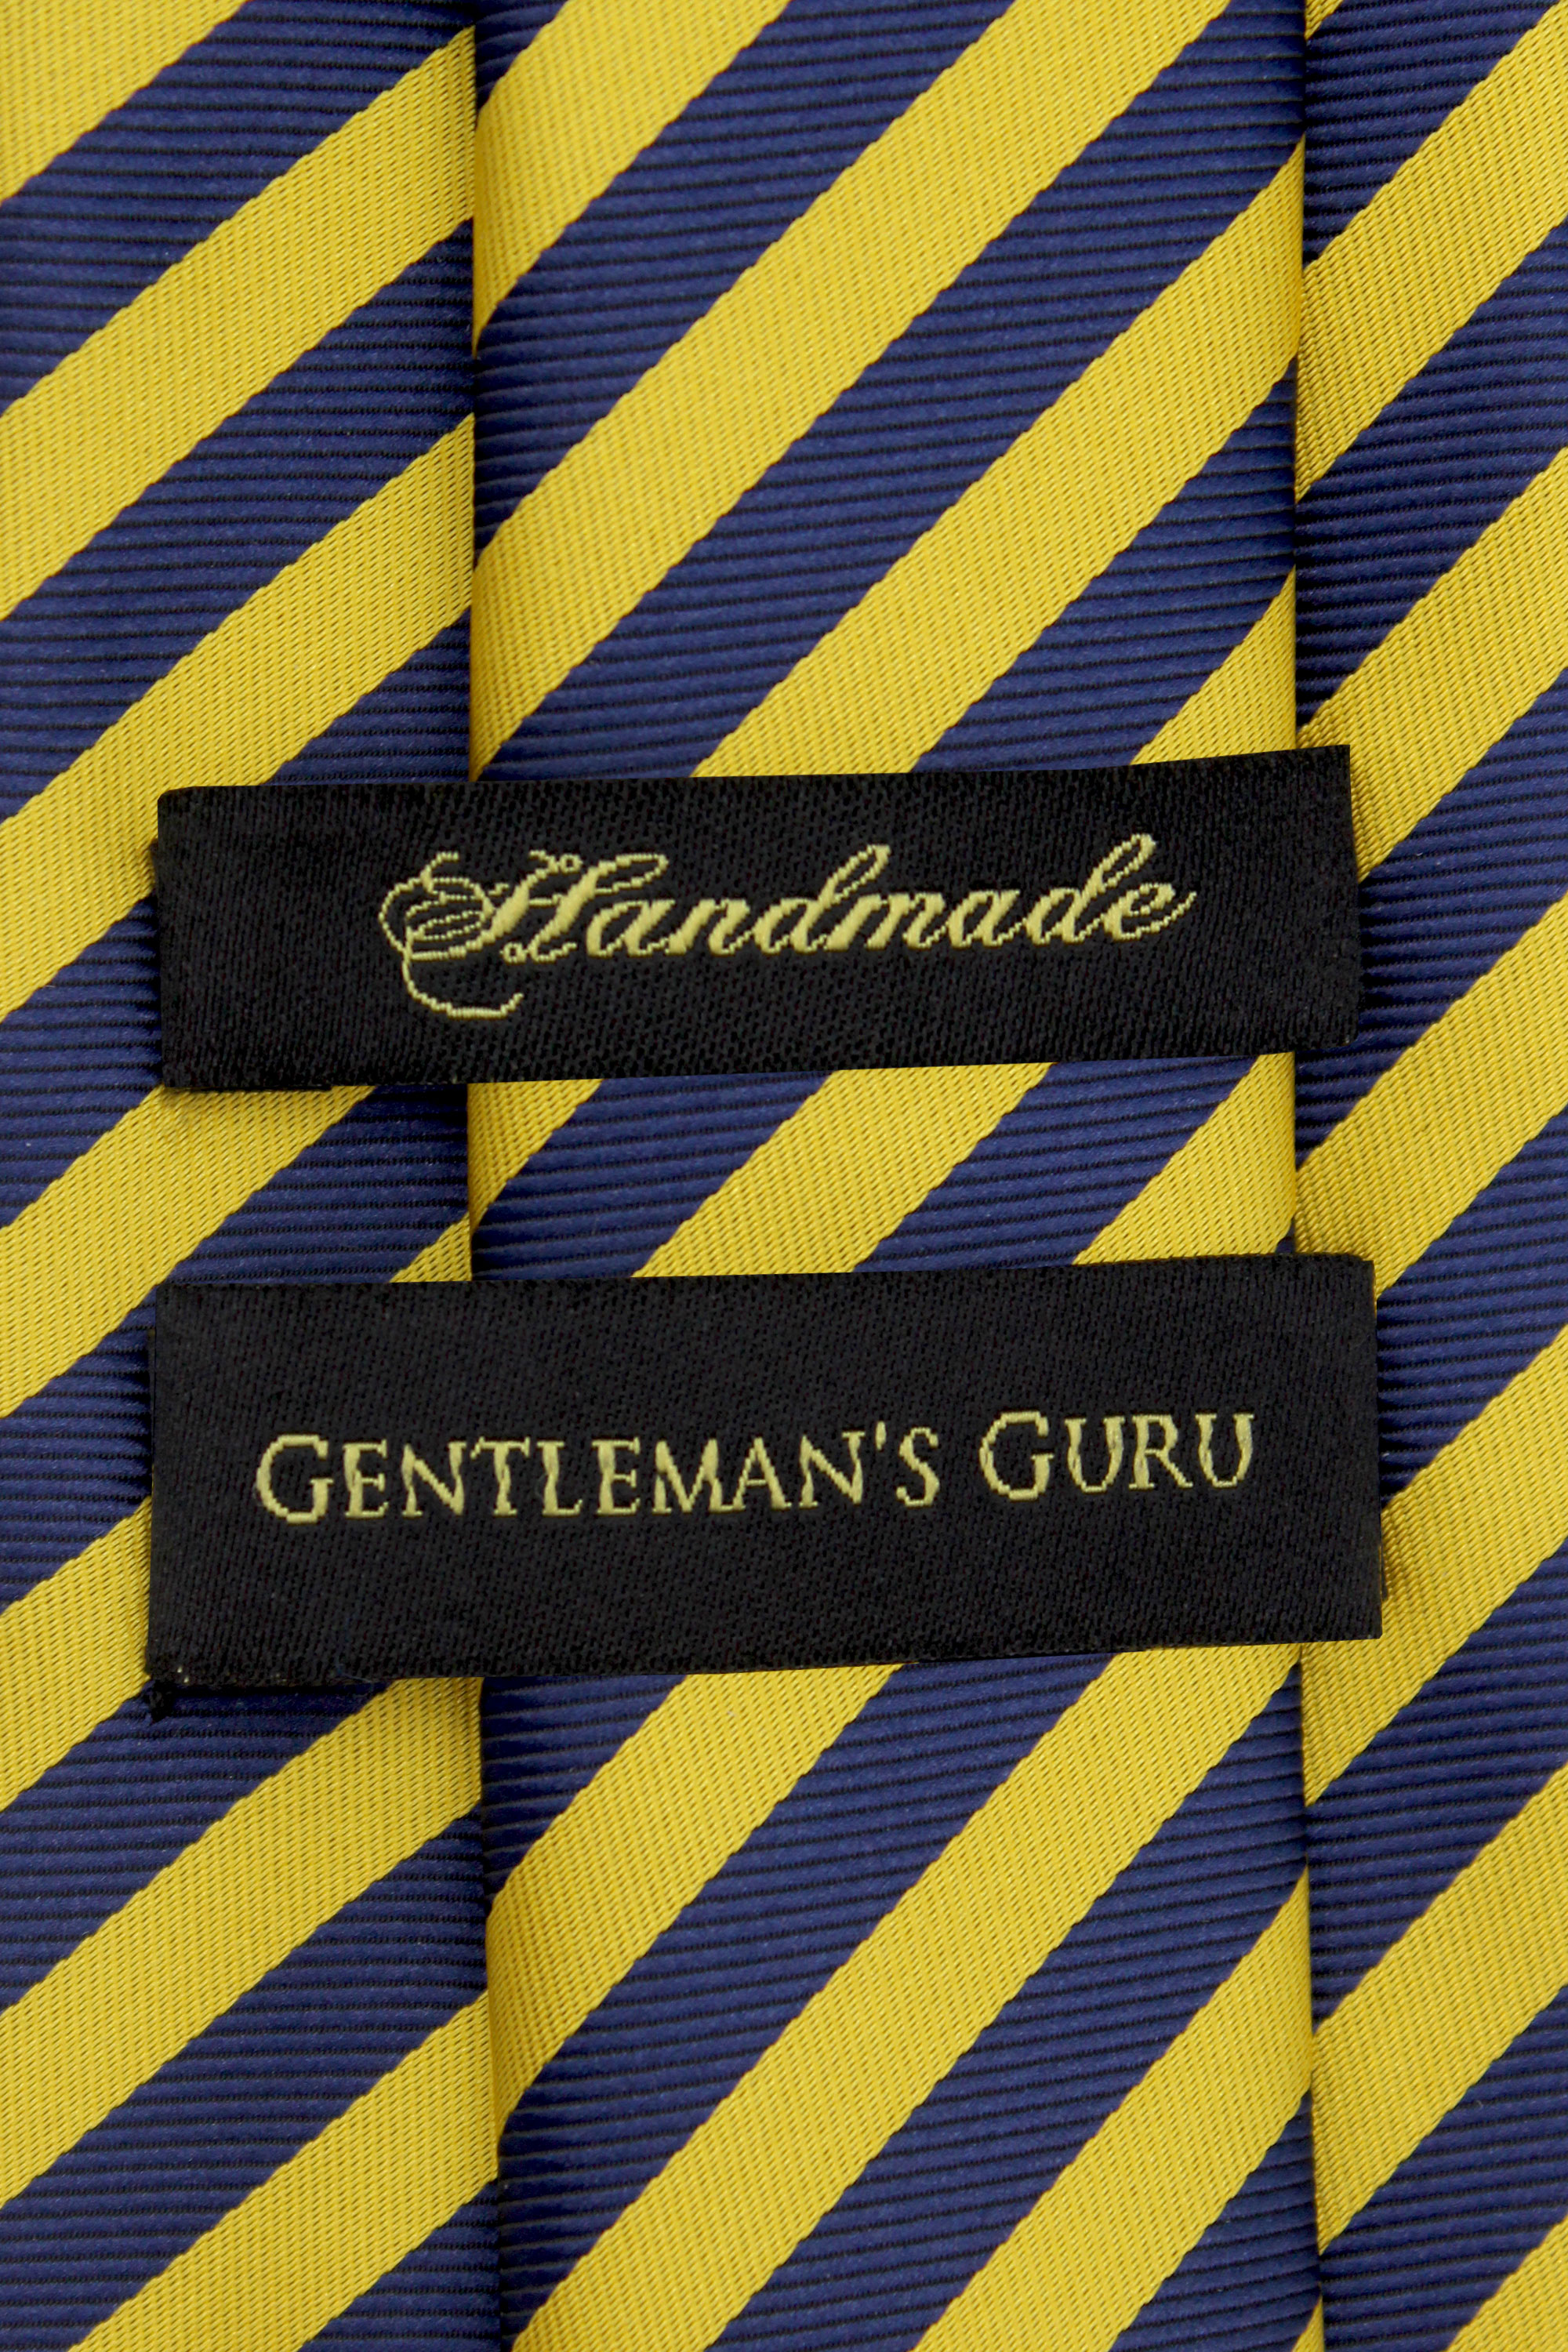 Gold-and-Navy-Blue-Striped-Branded-Tie-from-Gentlemansguru.com